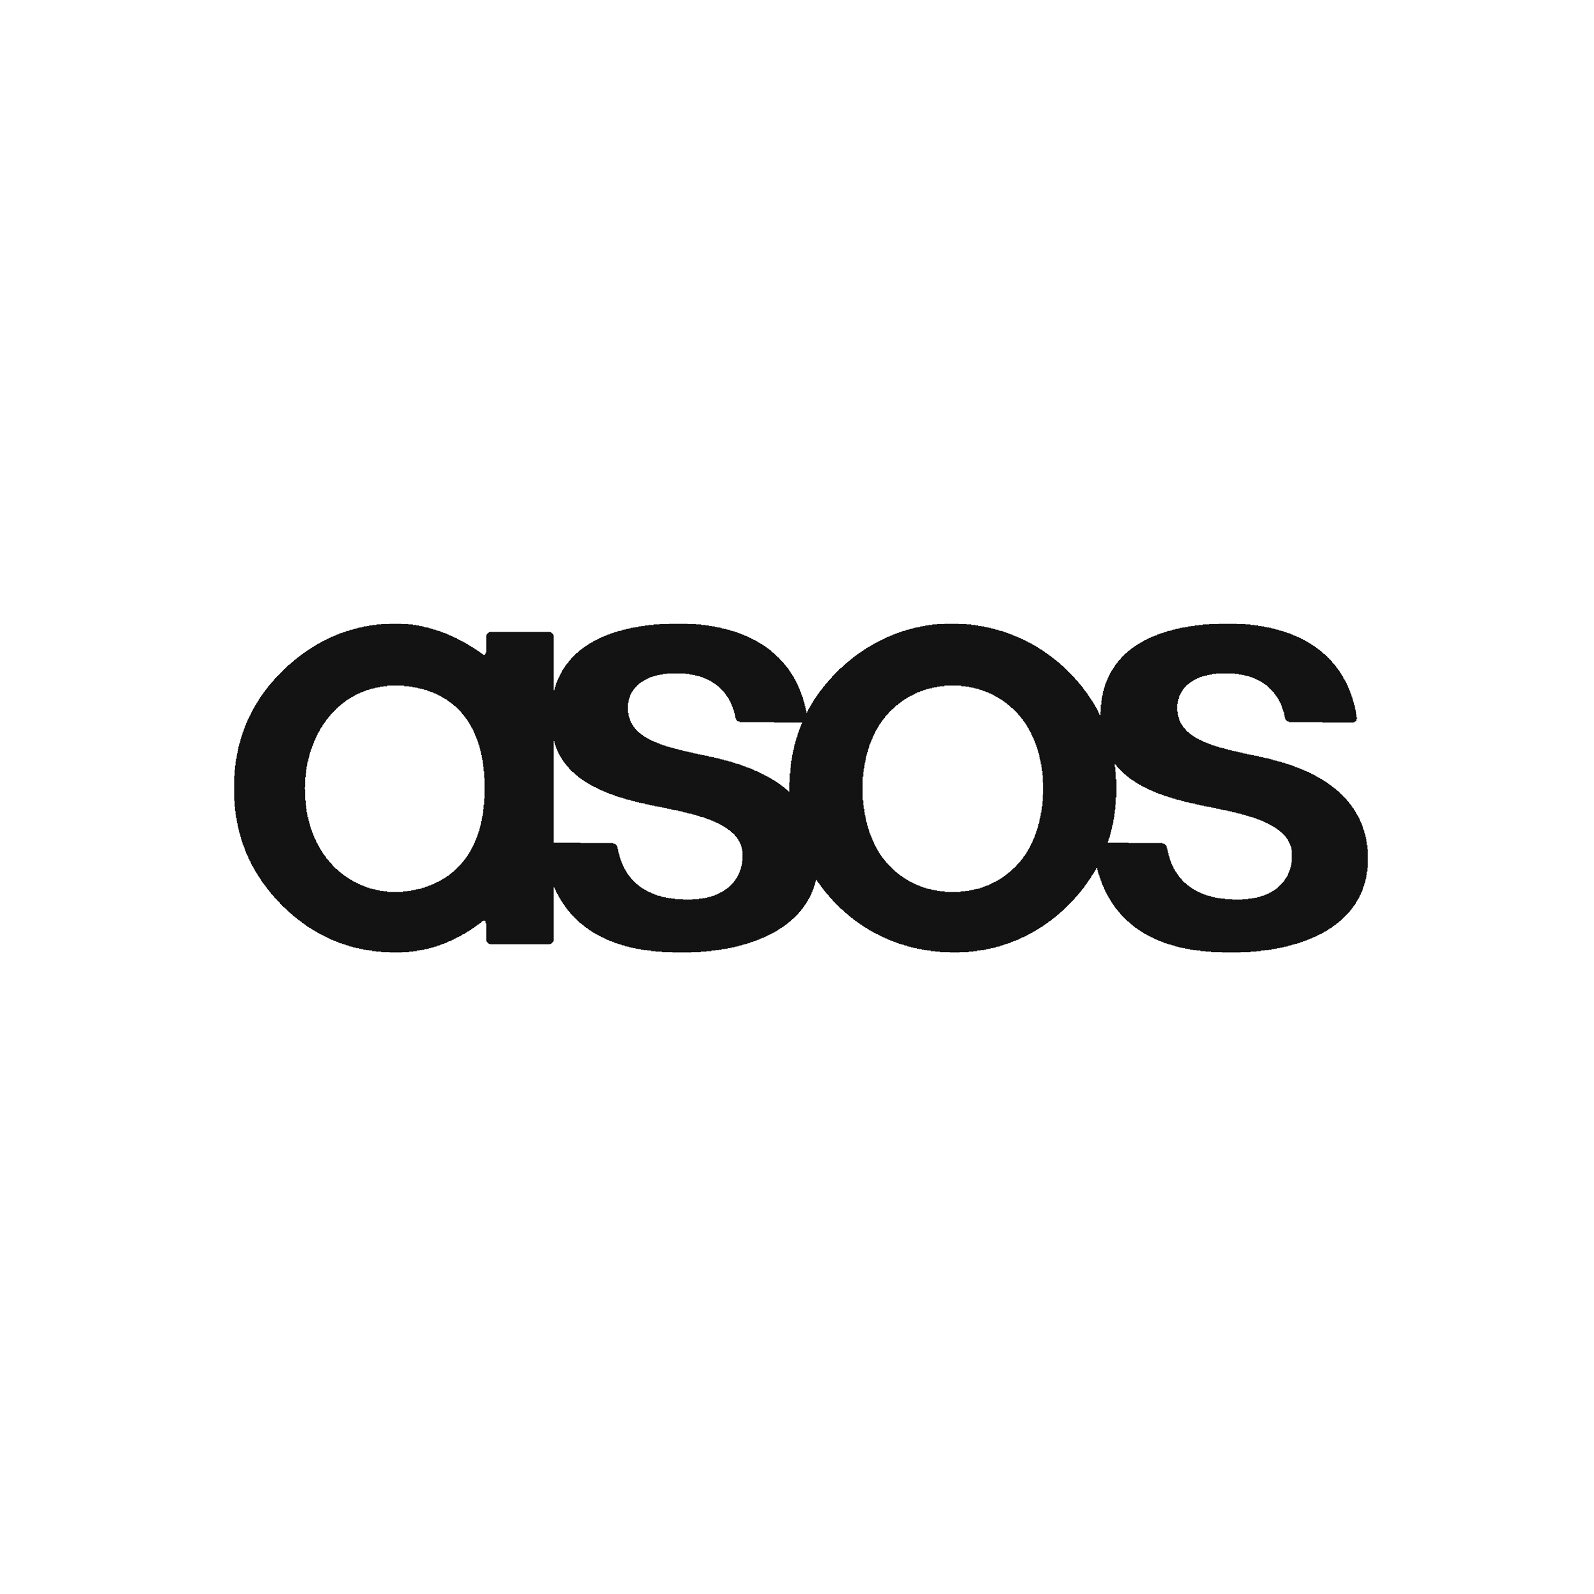 Jessica Abraham Asos Logo.jpg